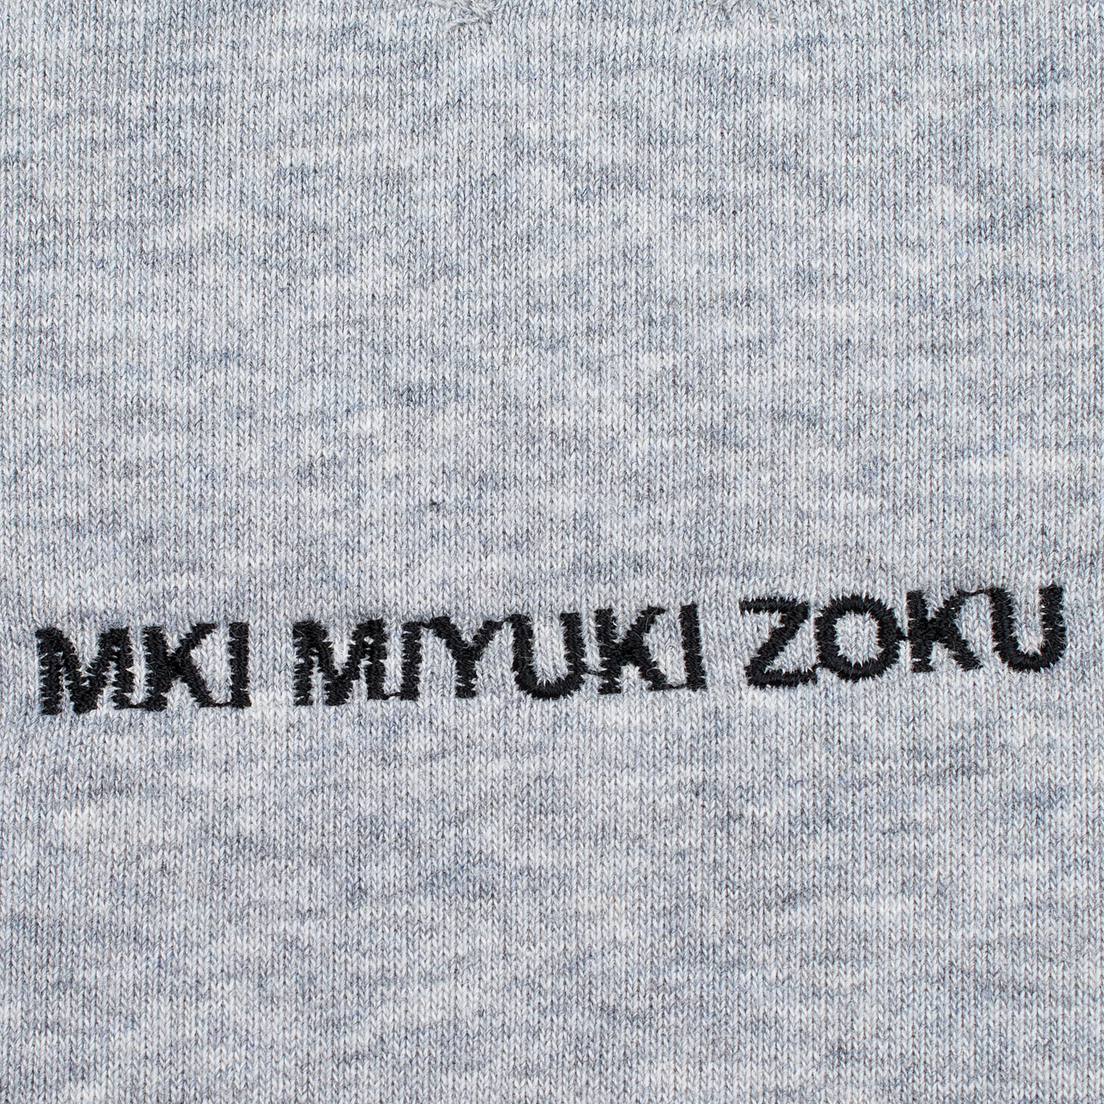 MKI Miyuki-Zoku Мужская толстовка Embroidered Logo Sweat